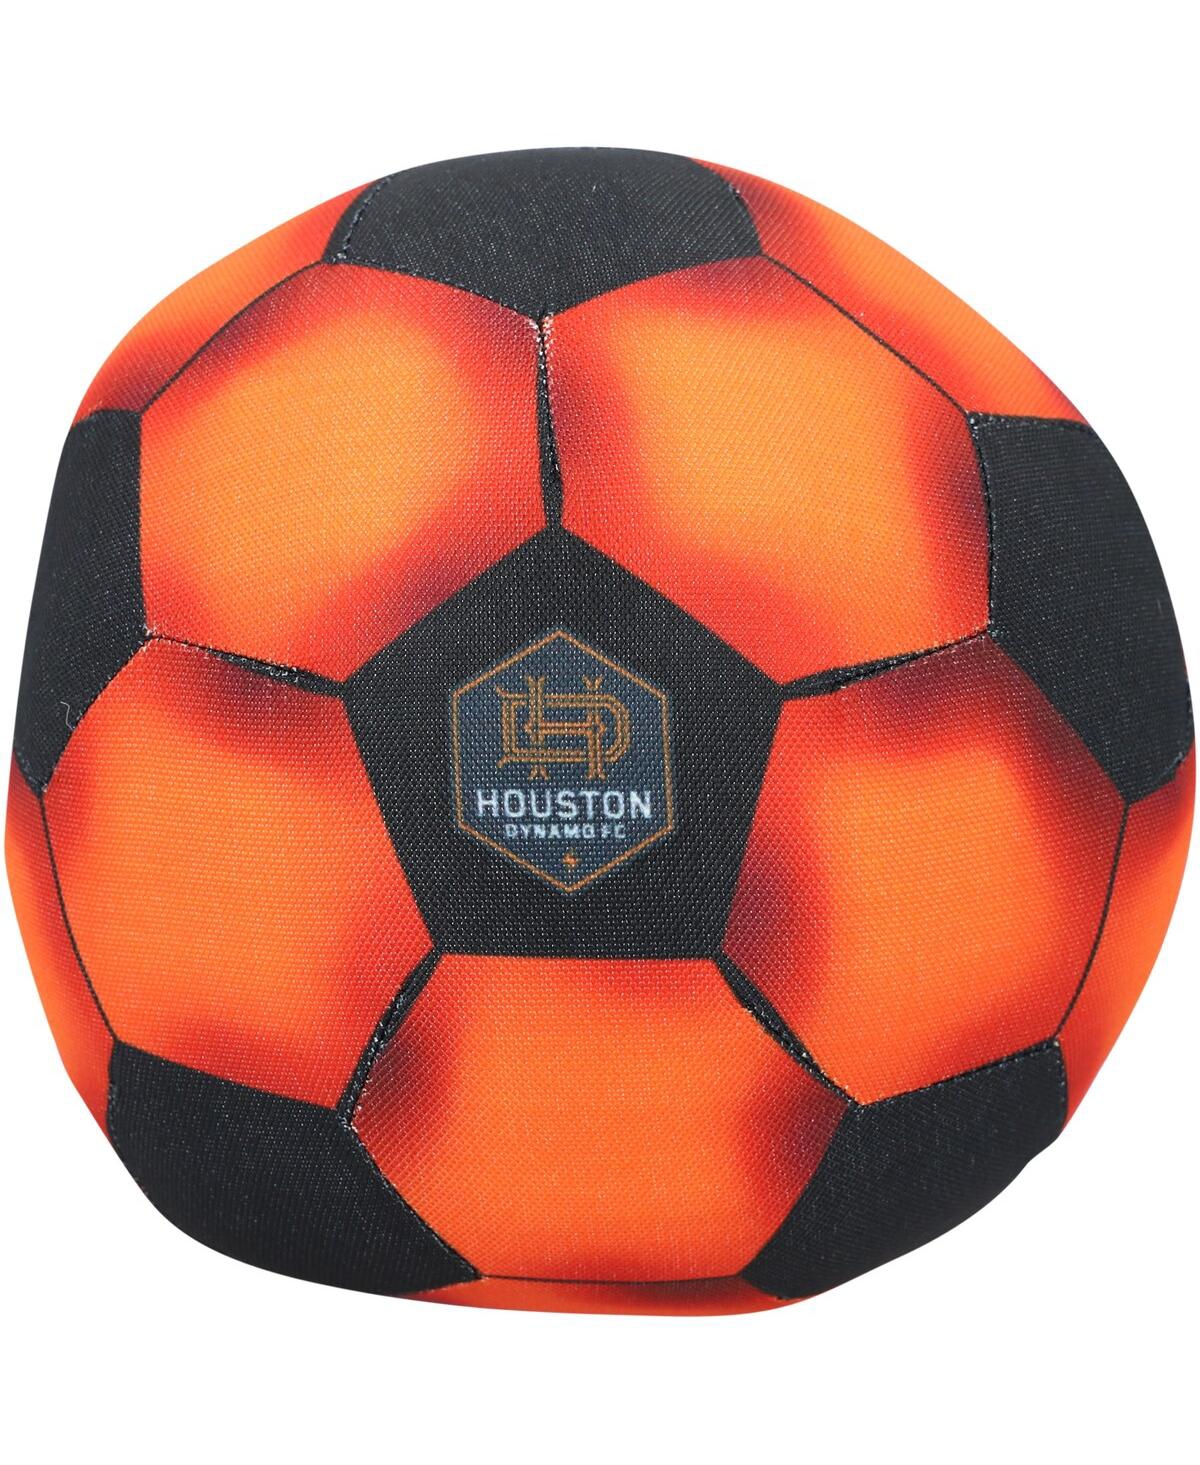 Houston Dynamo Fc Soccer Ball Plush Dog Toy - Orange